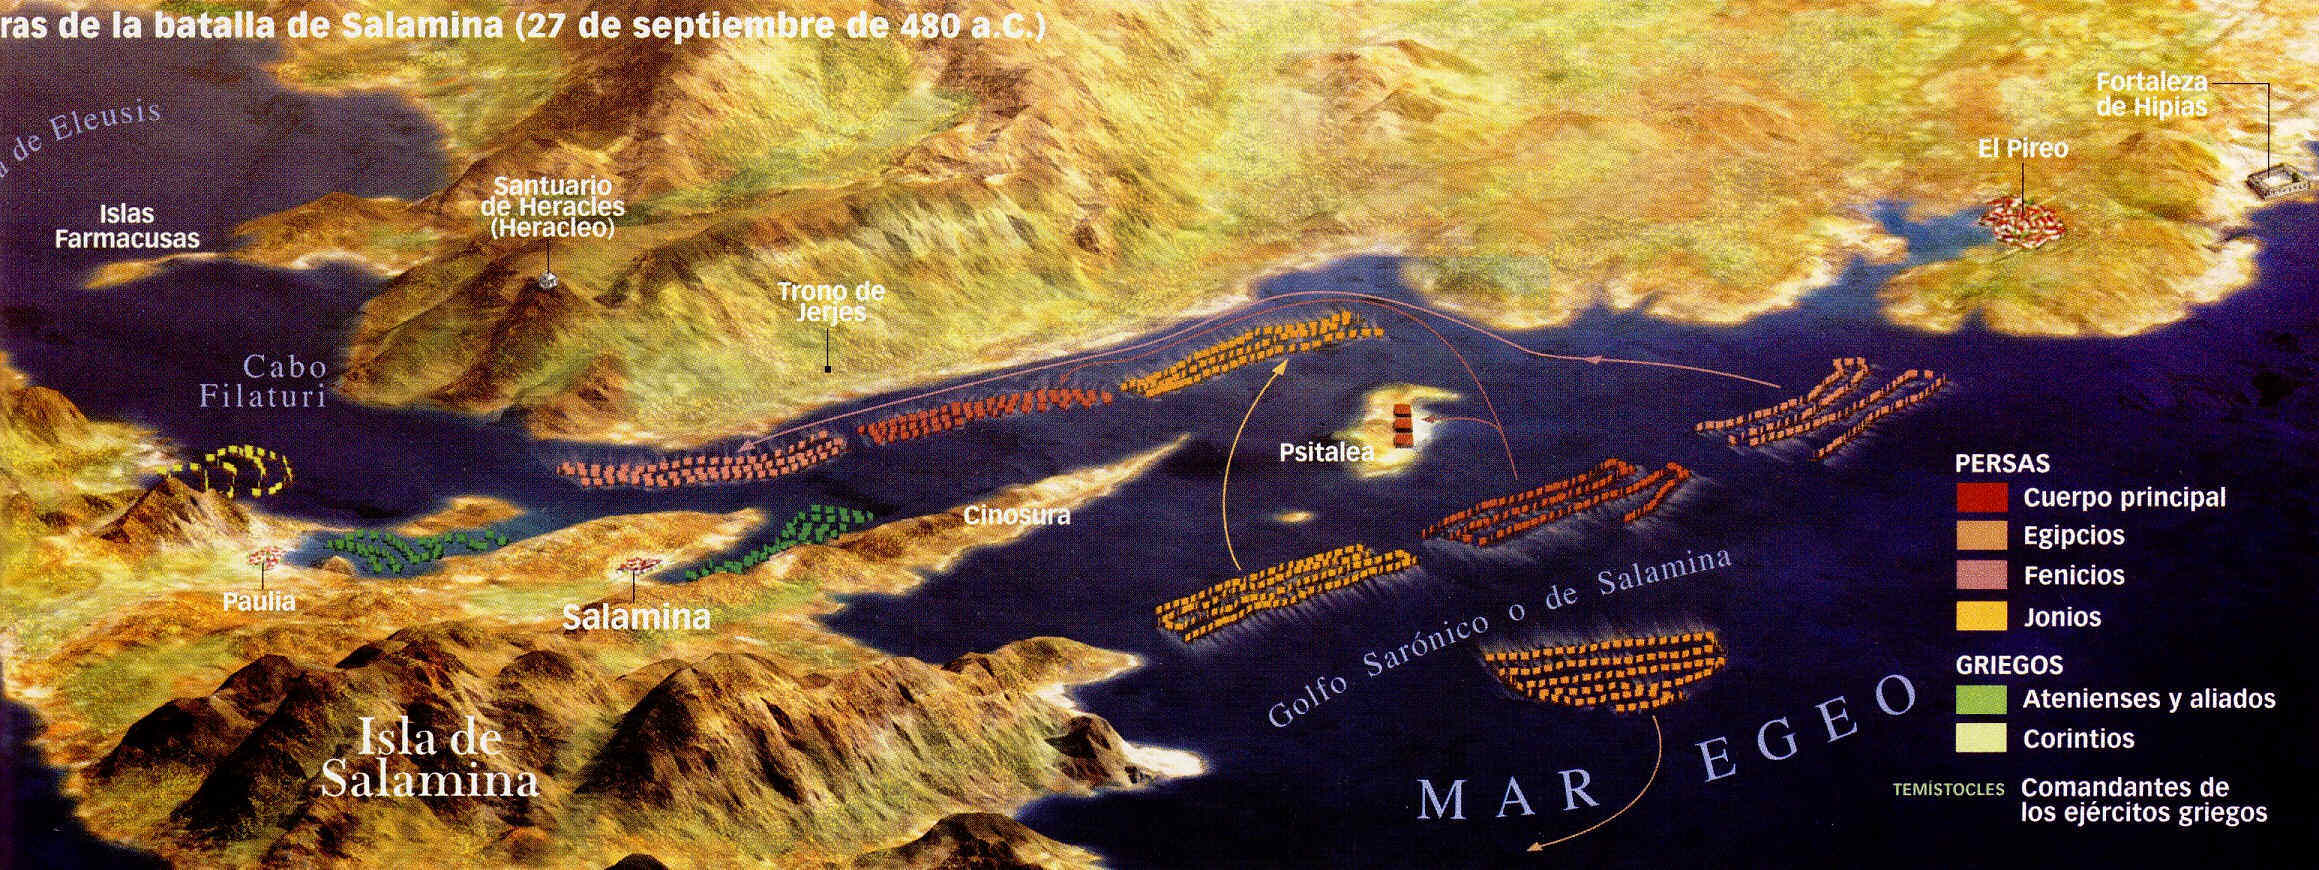 La batalla de Salamina 2 en la Grecia clásica 53